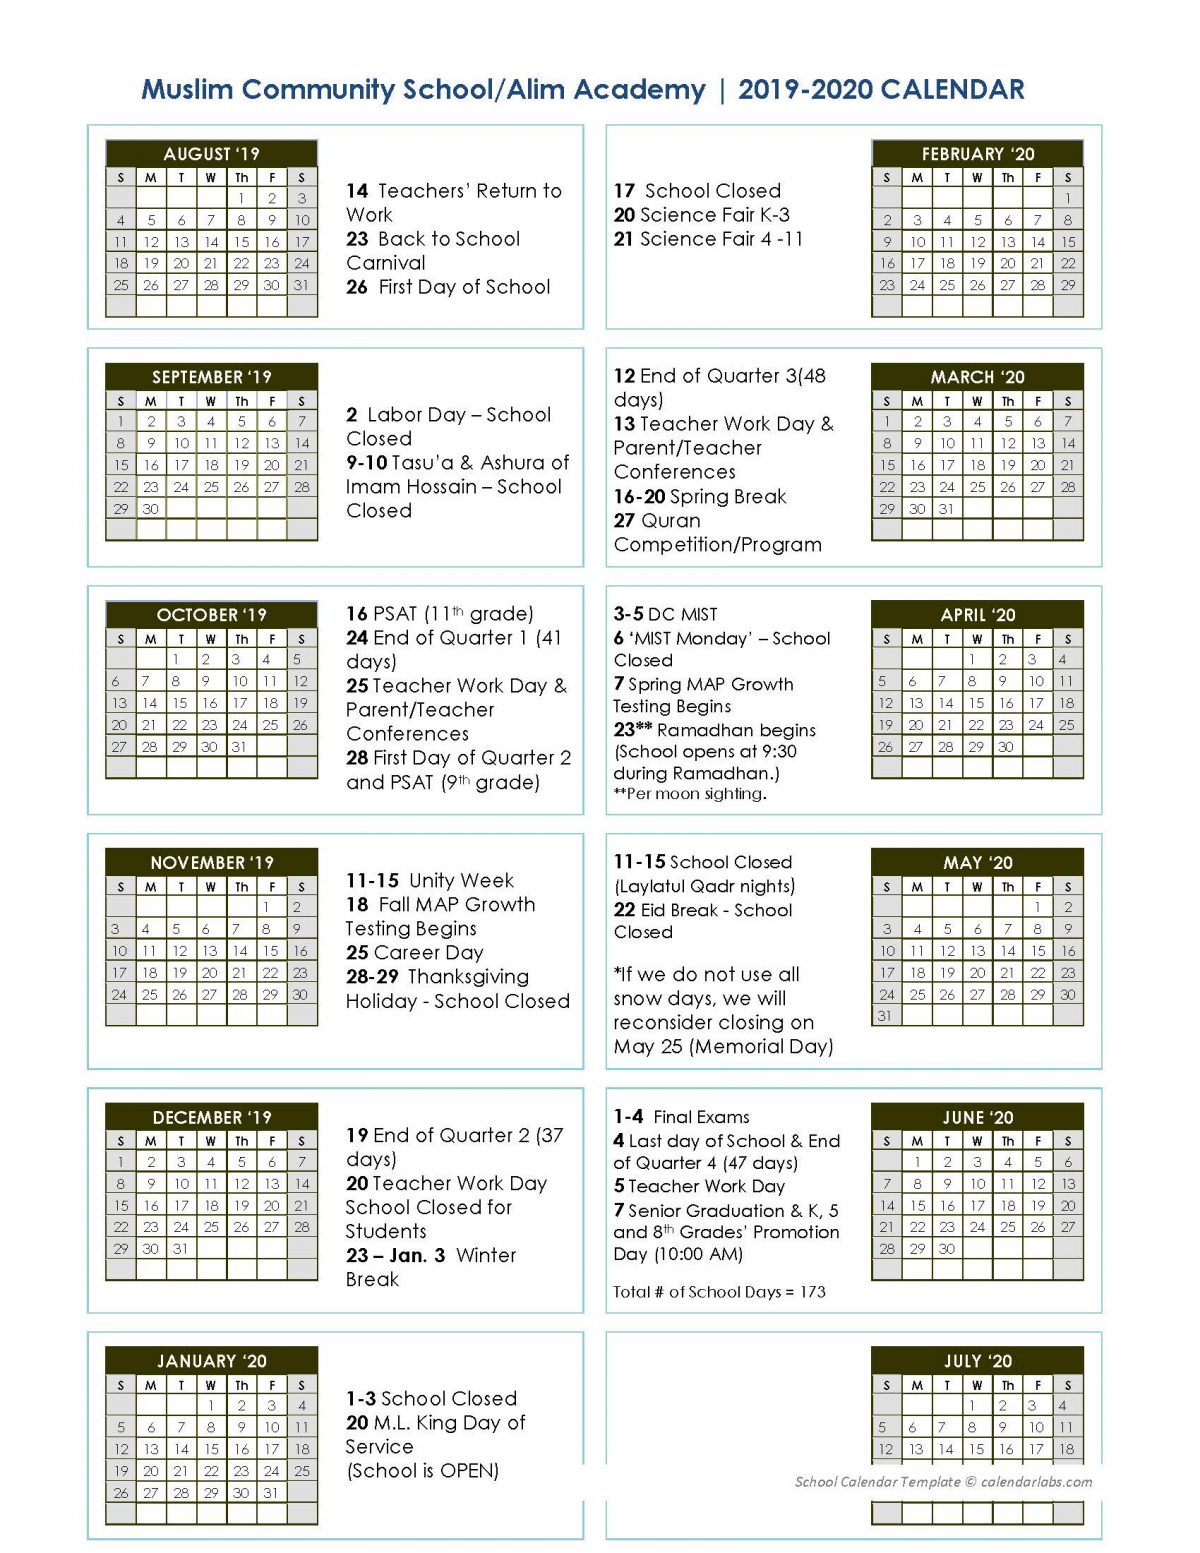 Revised School Calendar - MCS/AA : Islamic School & College Preparatory